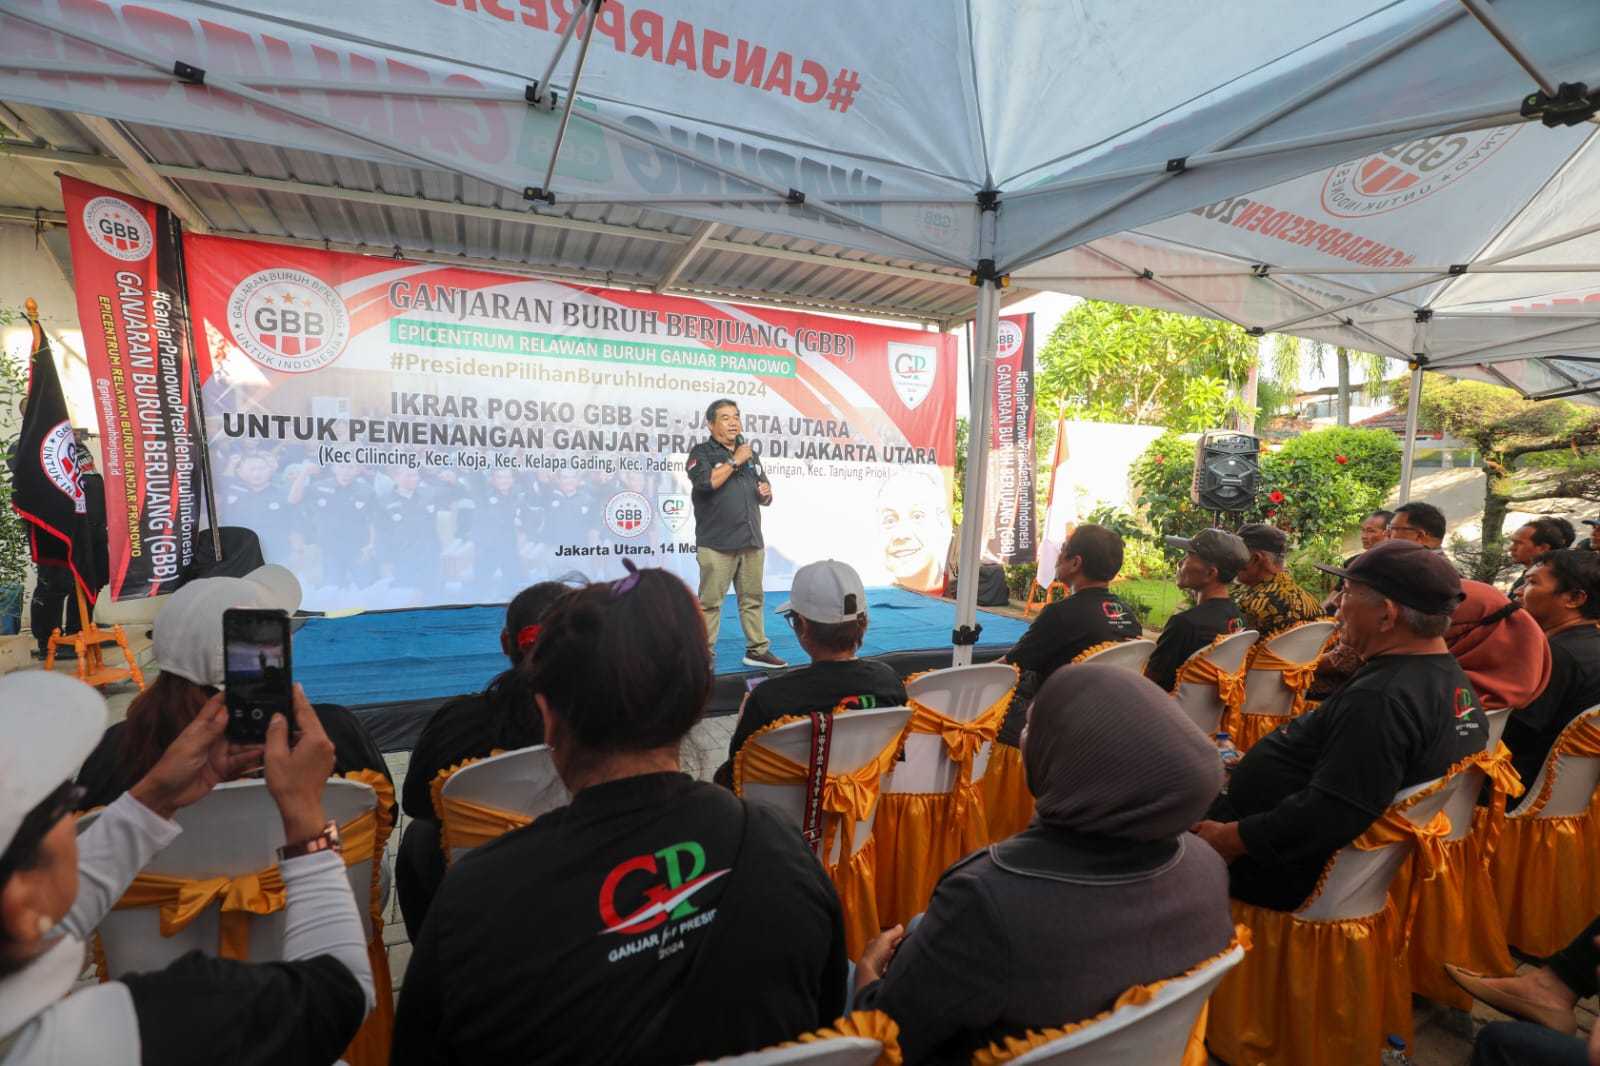 Relawan Posko GBB Se-Jakarta Utara Ikrar Dukung Ganjar Jadi Presiden 2024